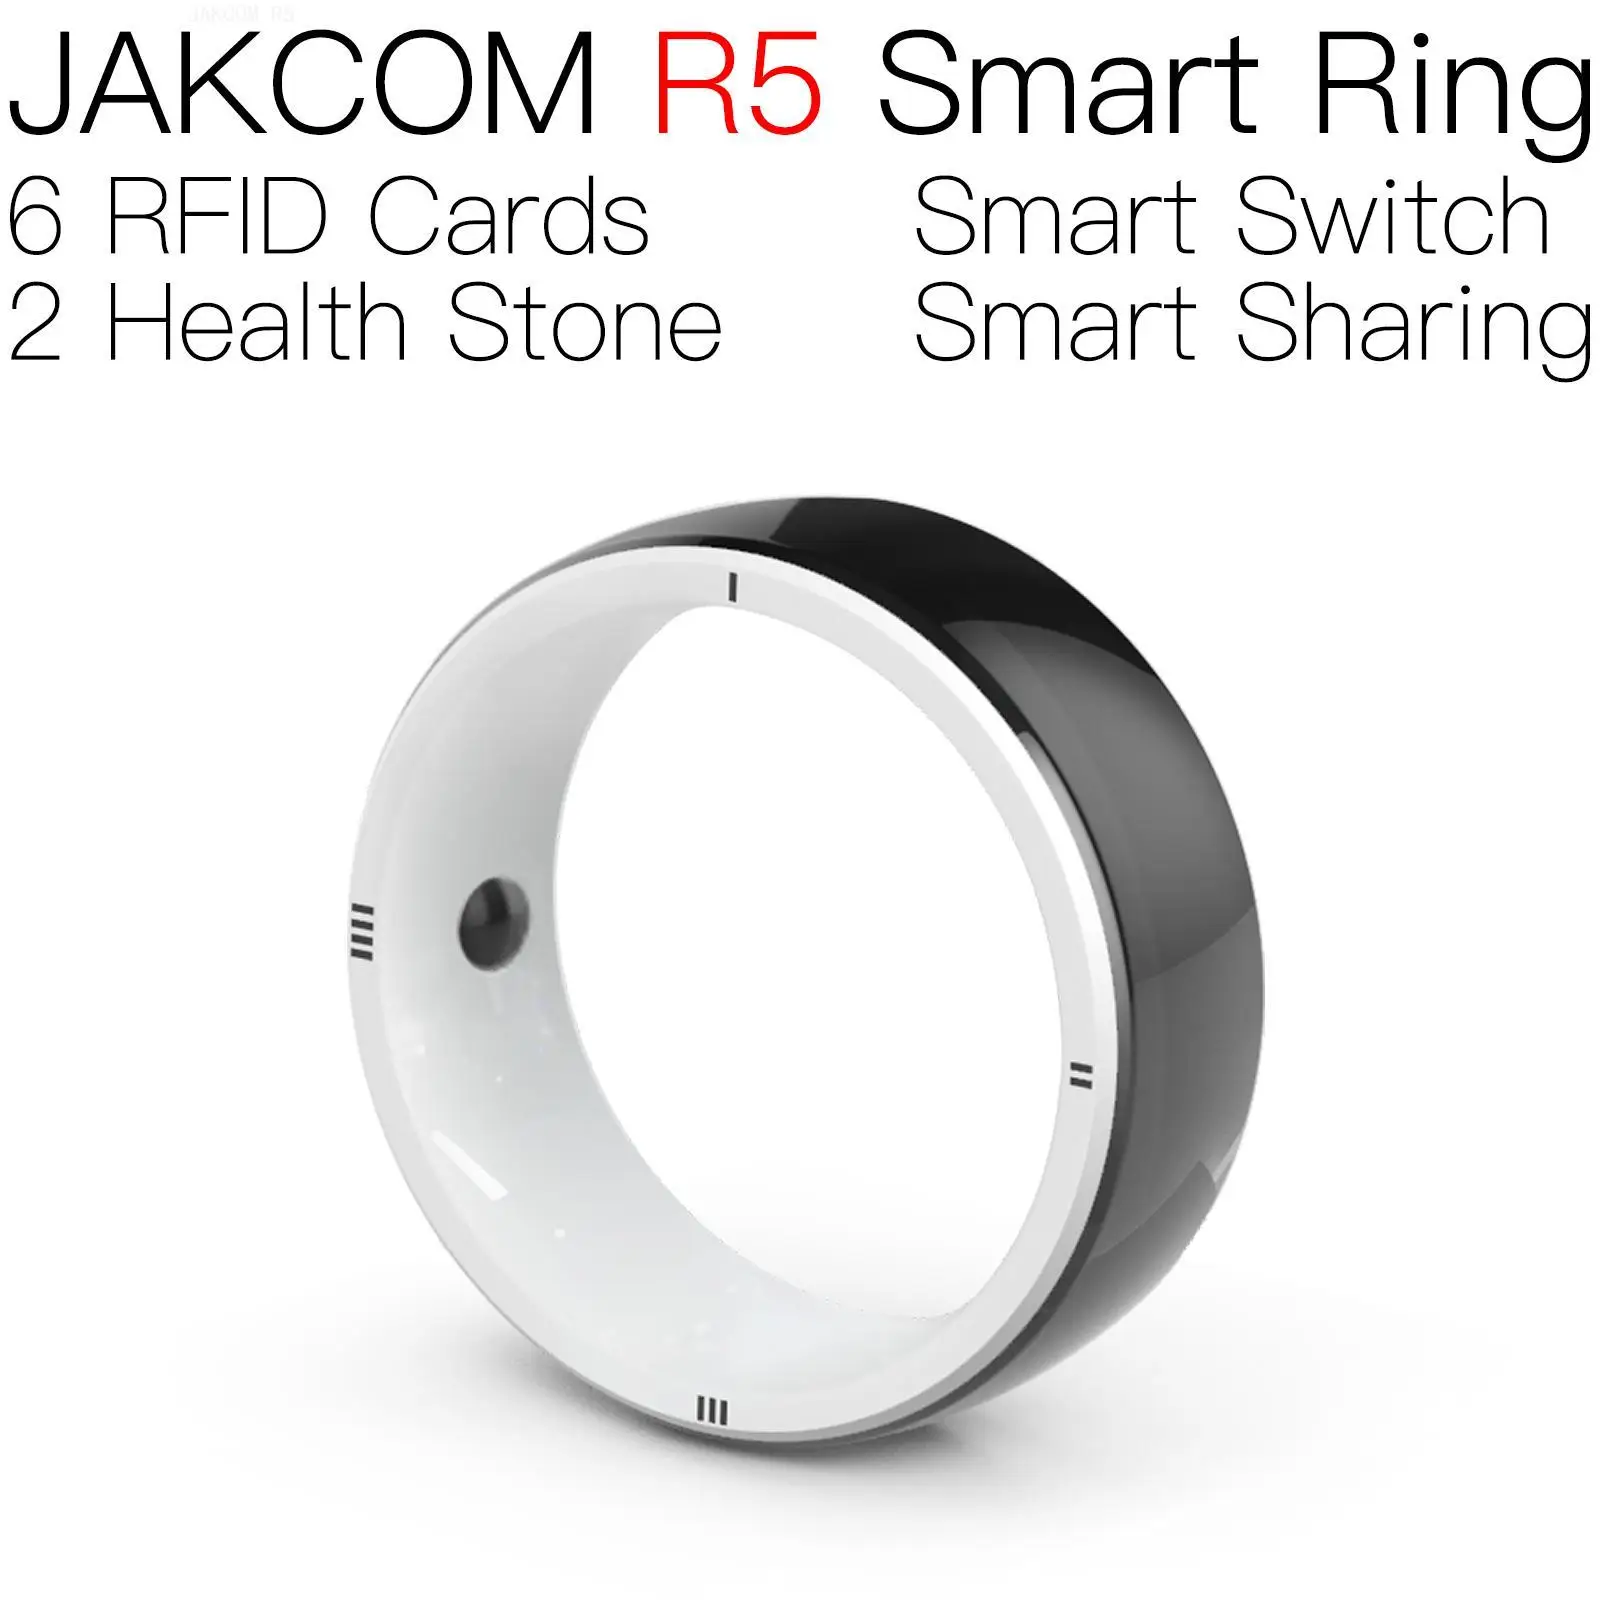 

JAKCOM R5 Smart Ring New arrival as nfc smartphone swedish language id tag for dogs rfid125khz key copy iso 15693 uid clone